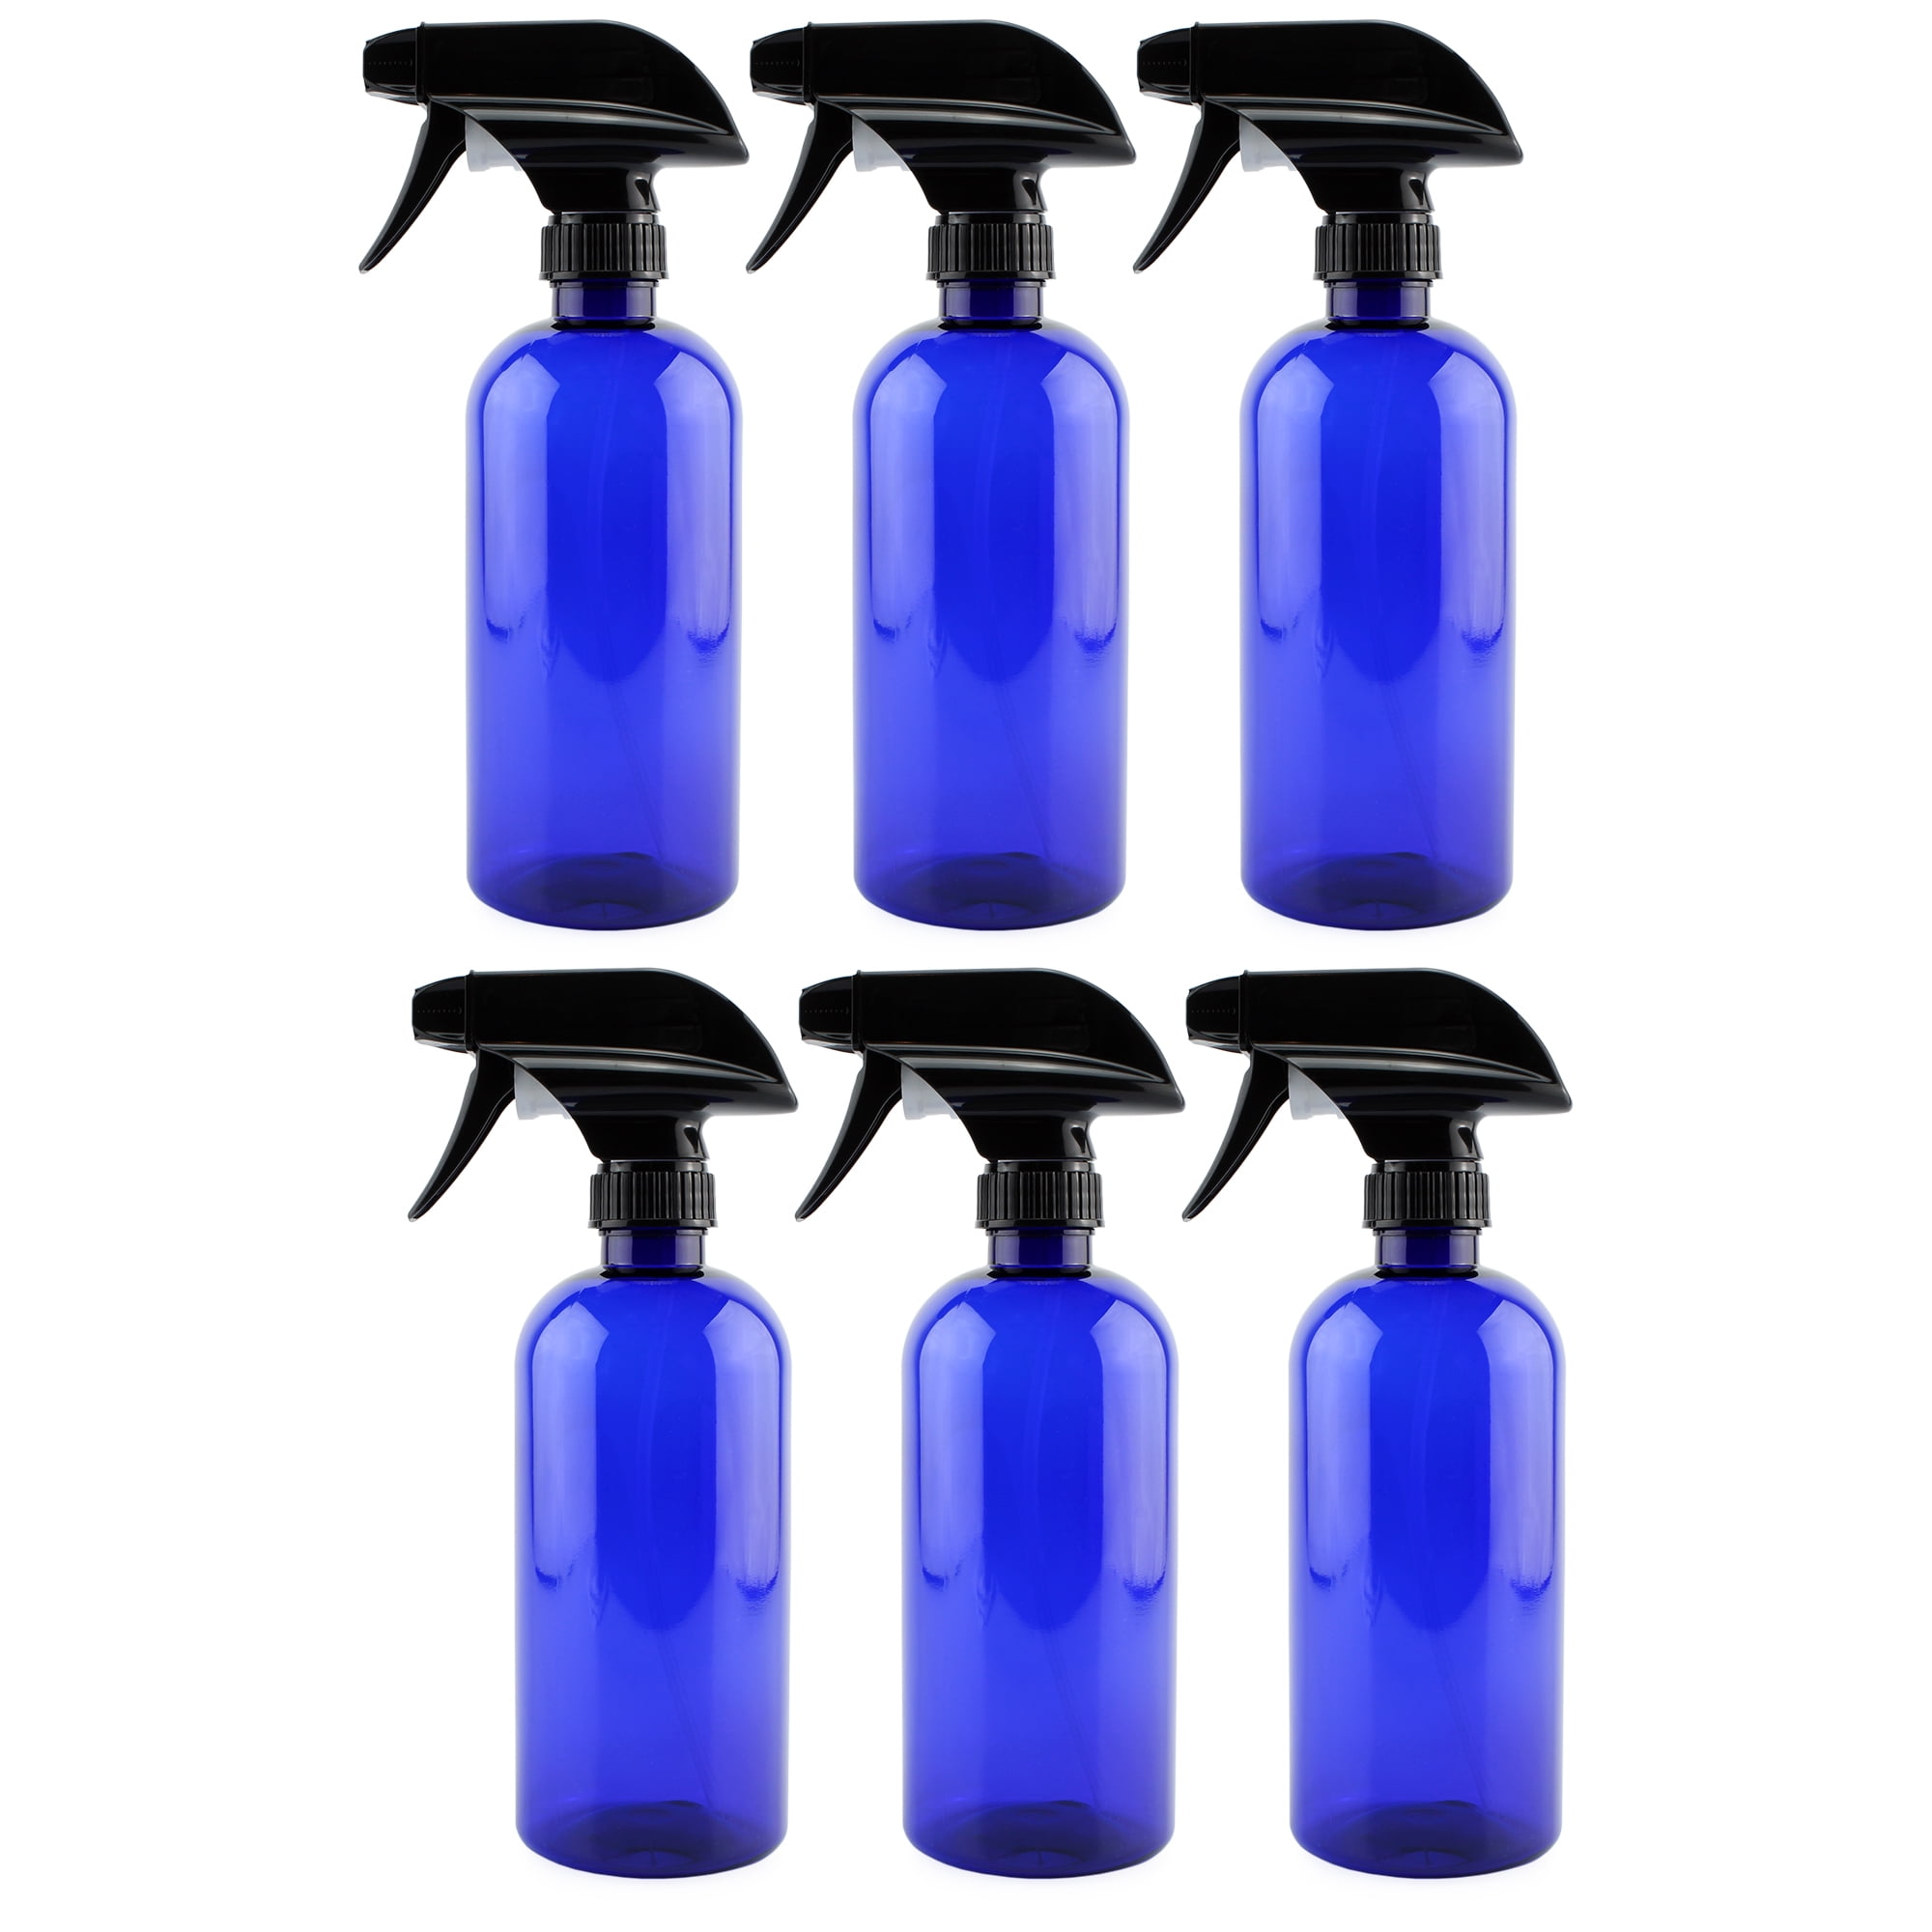 16oz Cobalt Blue PLASTIC Spray Bottles w/Heavy Duty Mist & Stream